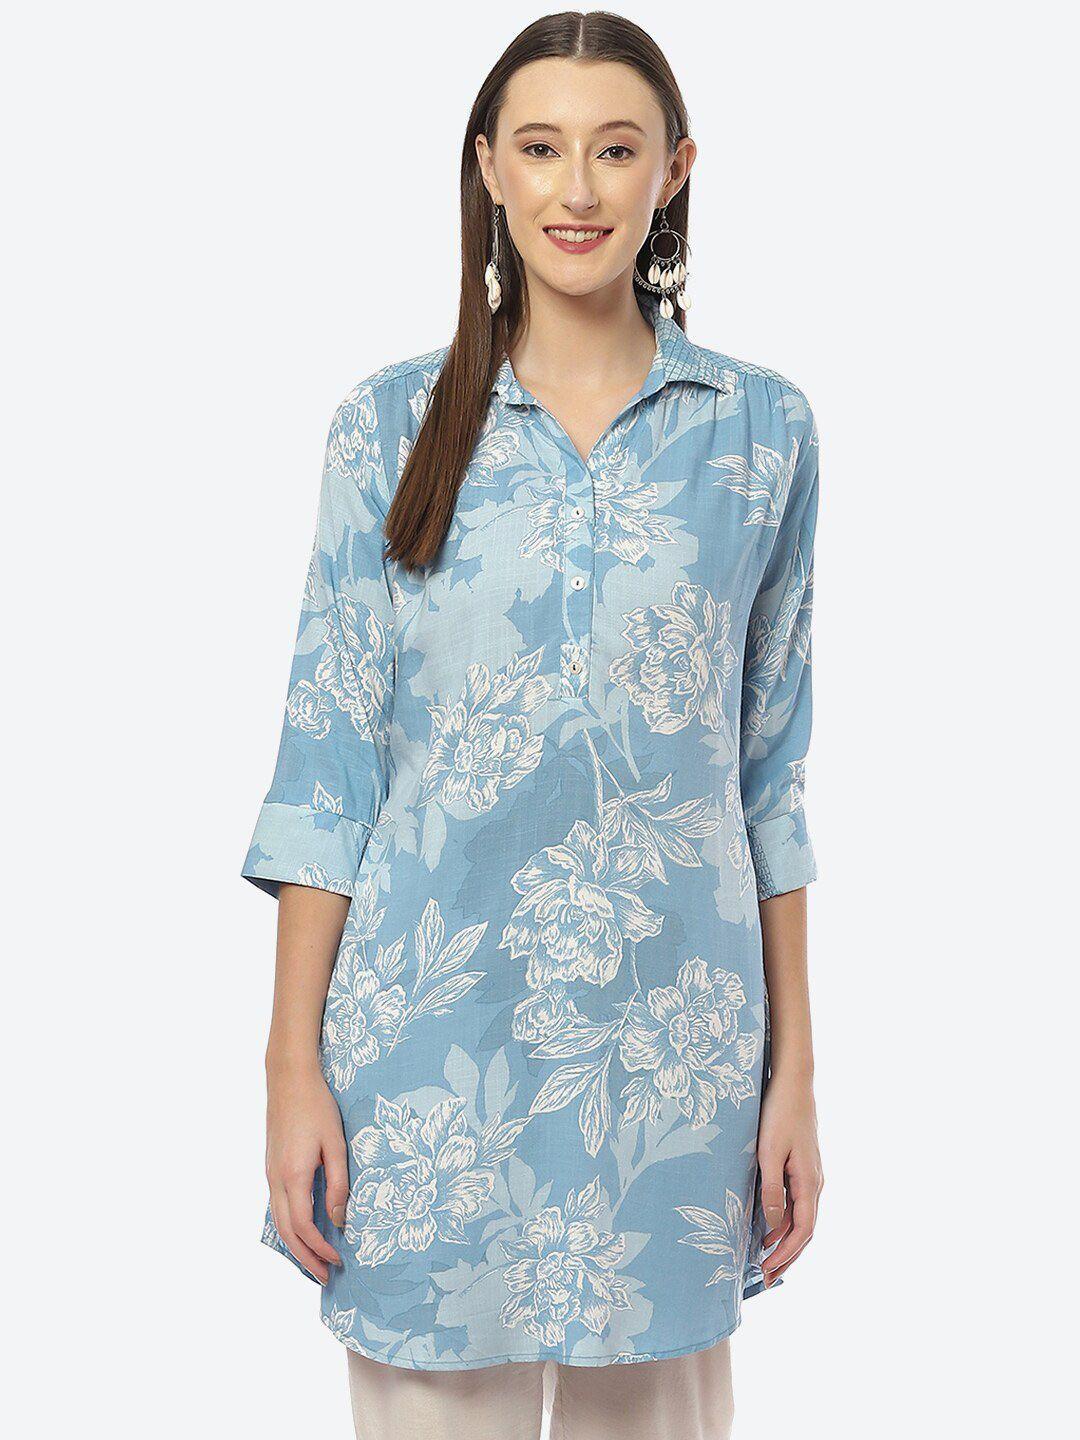 biba women teal classic floral printed longline casual shirt